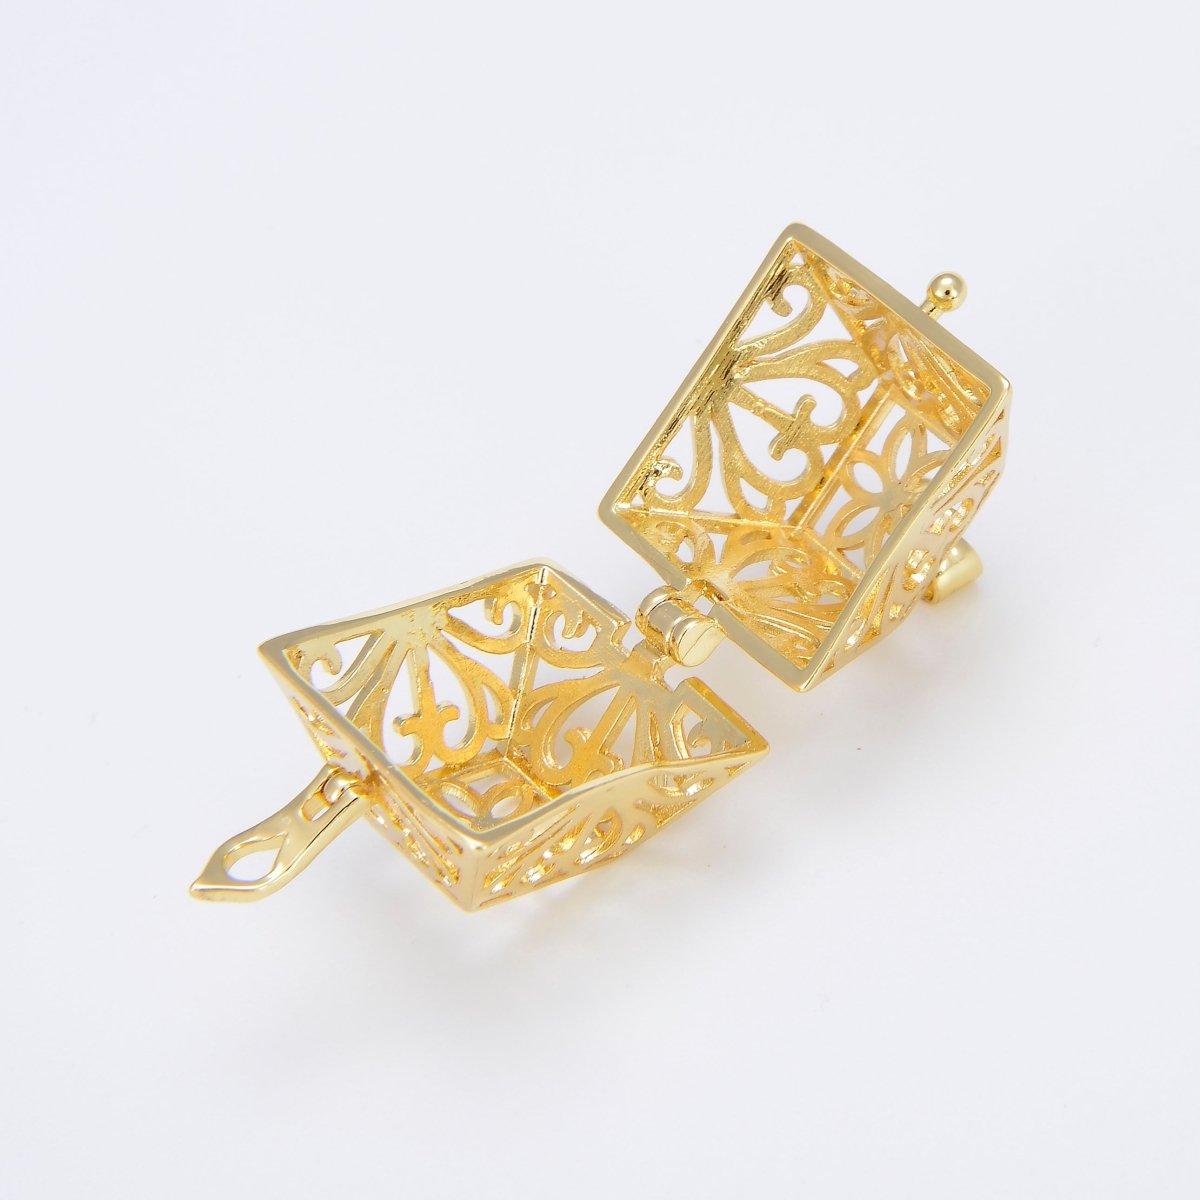 Healing Stone cage locket pendant Gold Hexagon Pendant, Gemstone Diffused Jewelry Making, DIY Gemstone Natural Stone Locket Charms necklace H-738 - DLUXCA